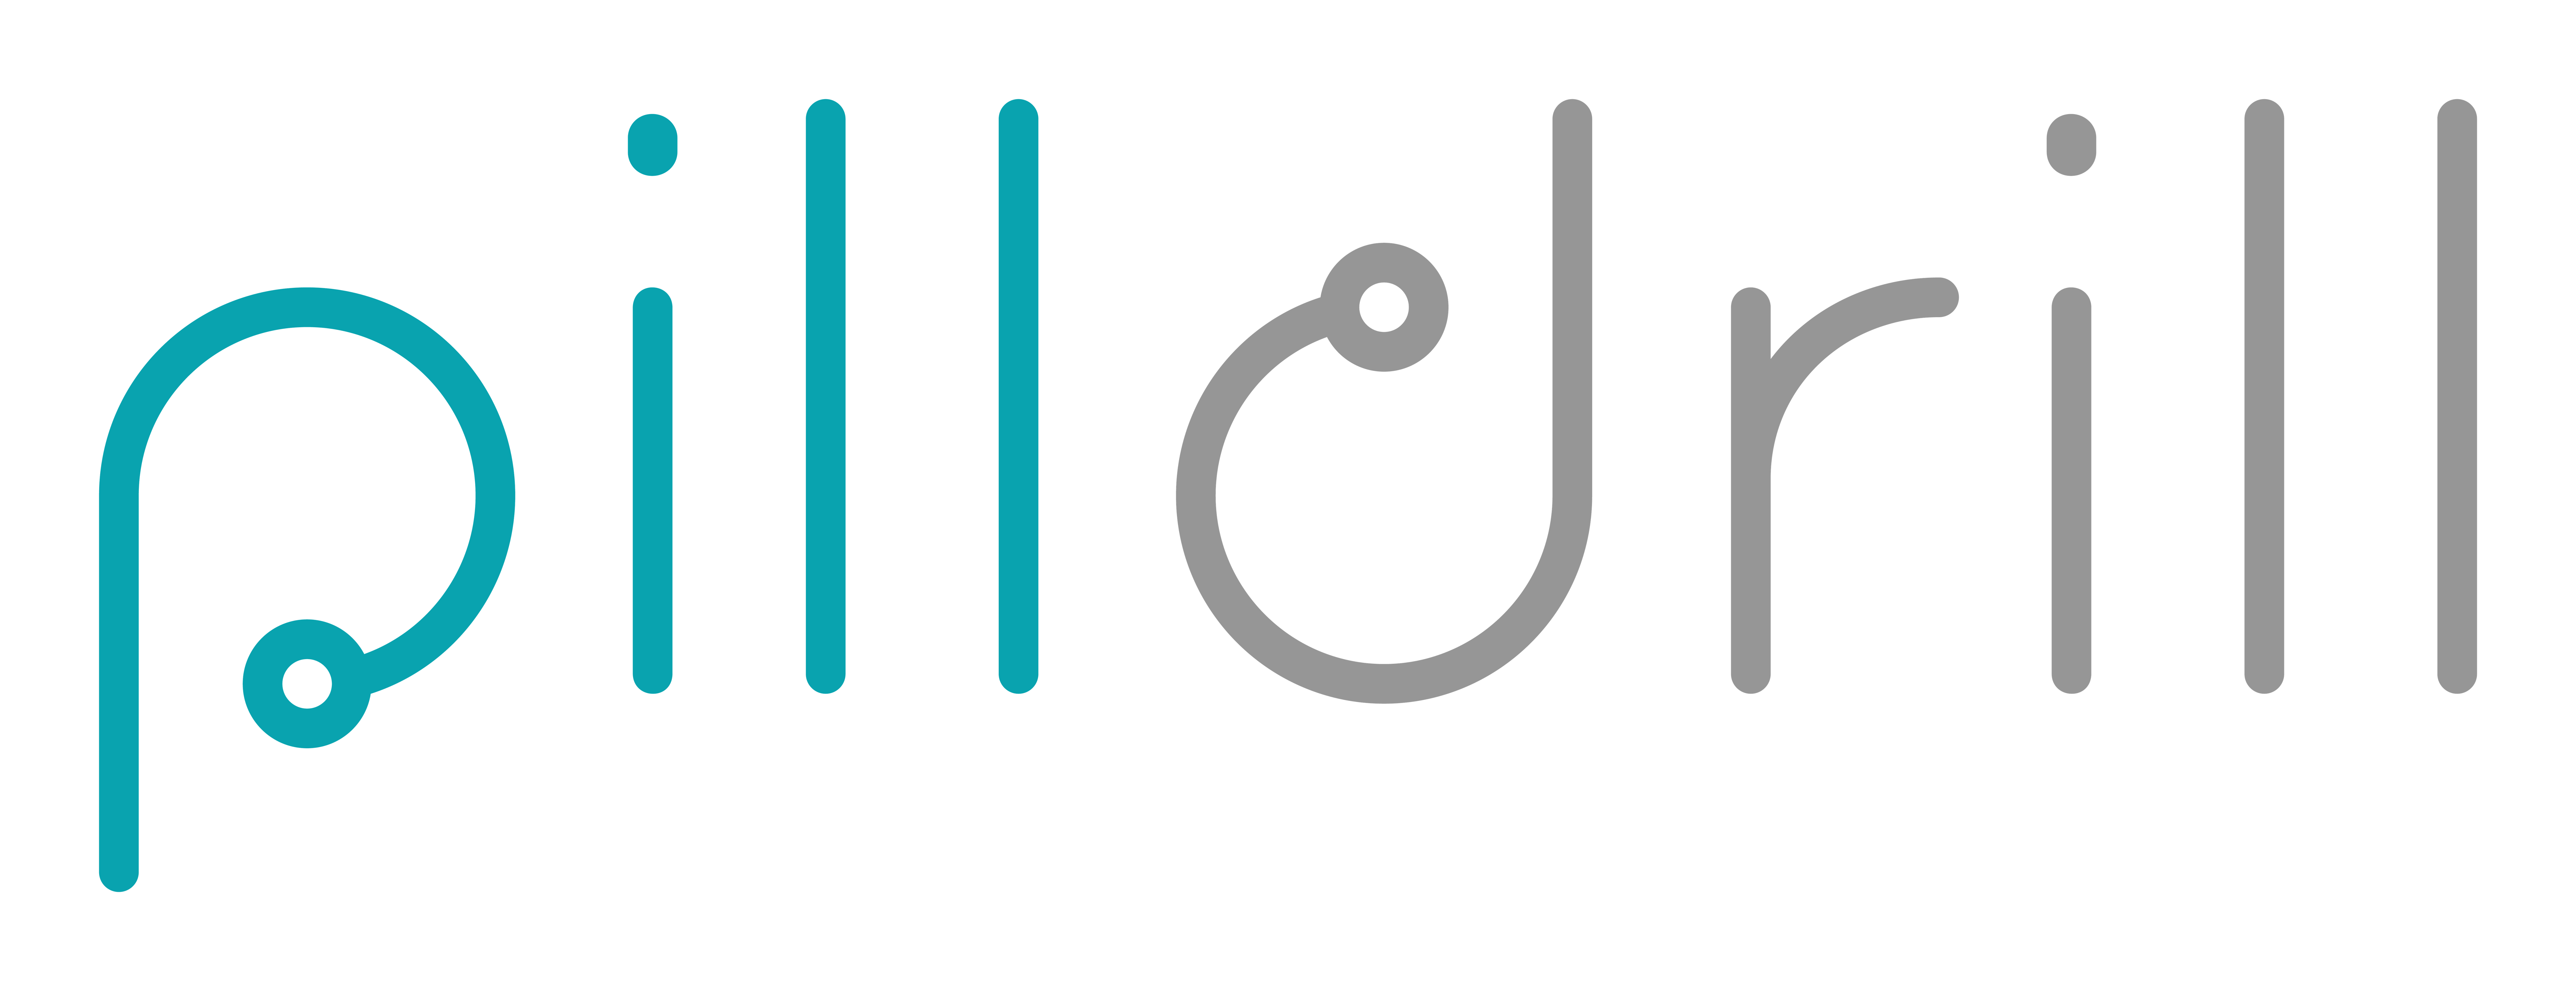 pilldrill-logo-final-rgb